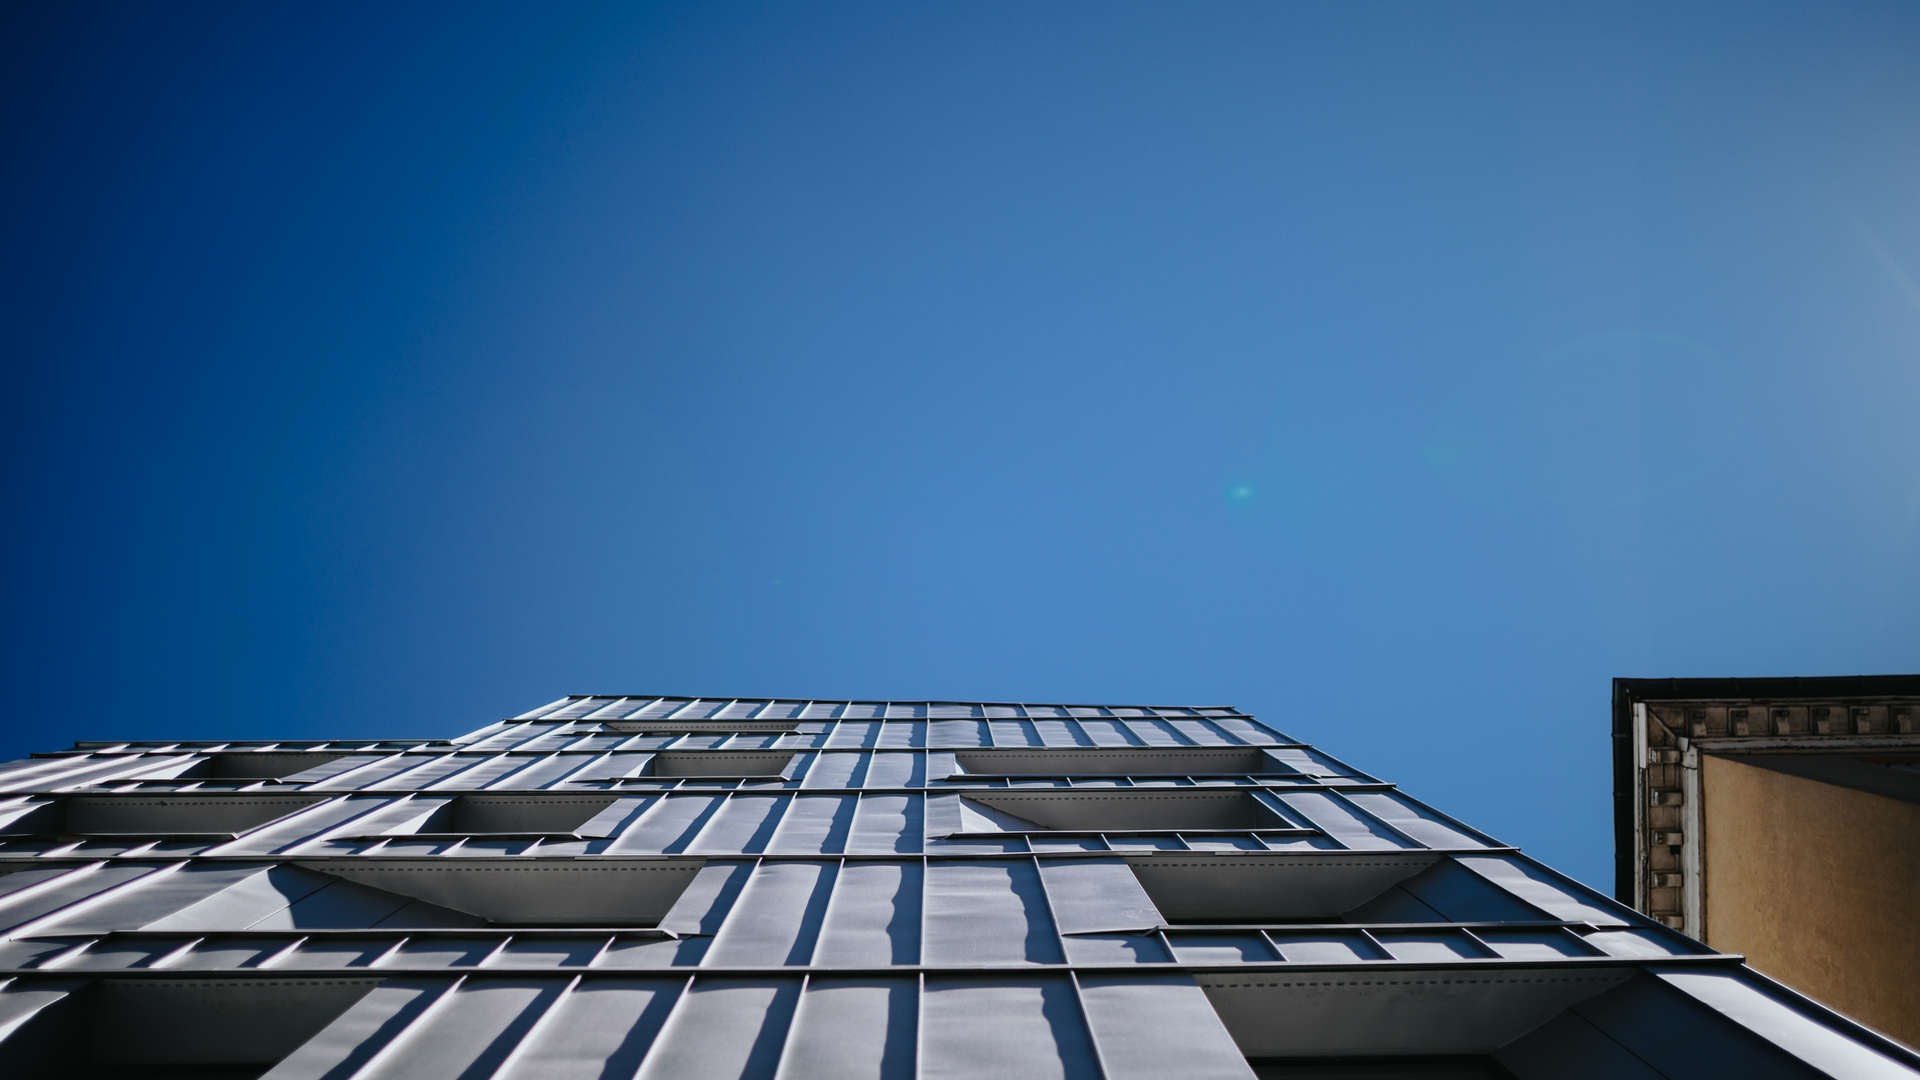 façade de l'hôtel boutique de Lyon contre un ciel bleu en face - Hôtel Keystone